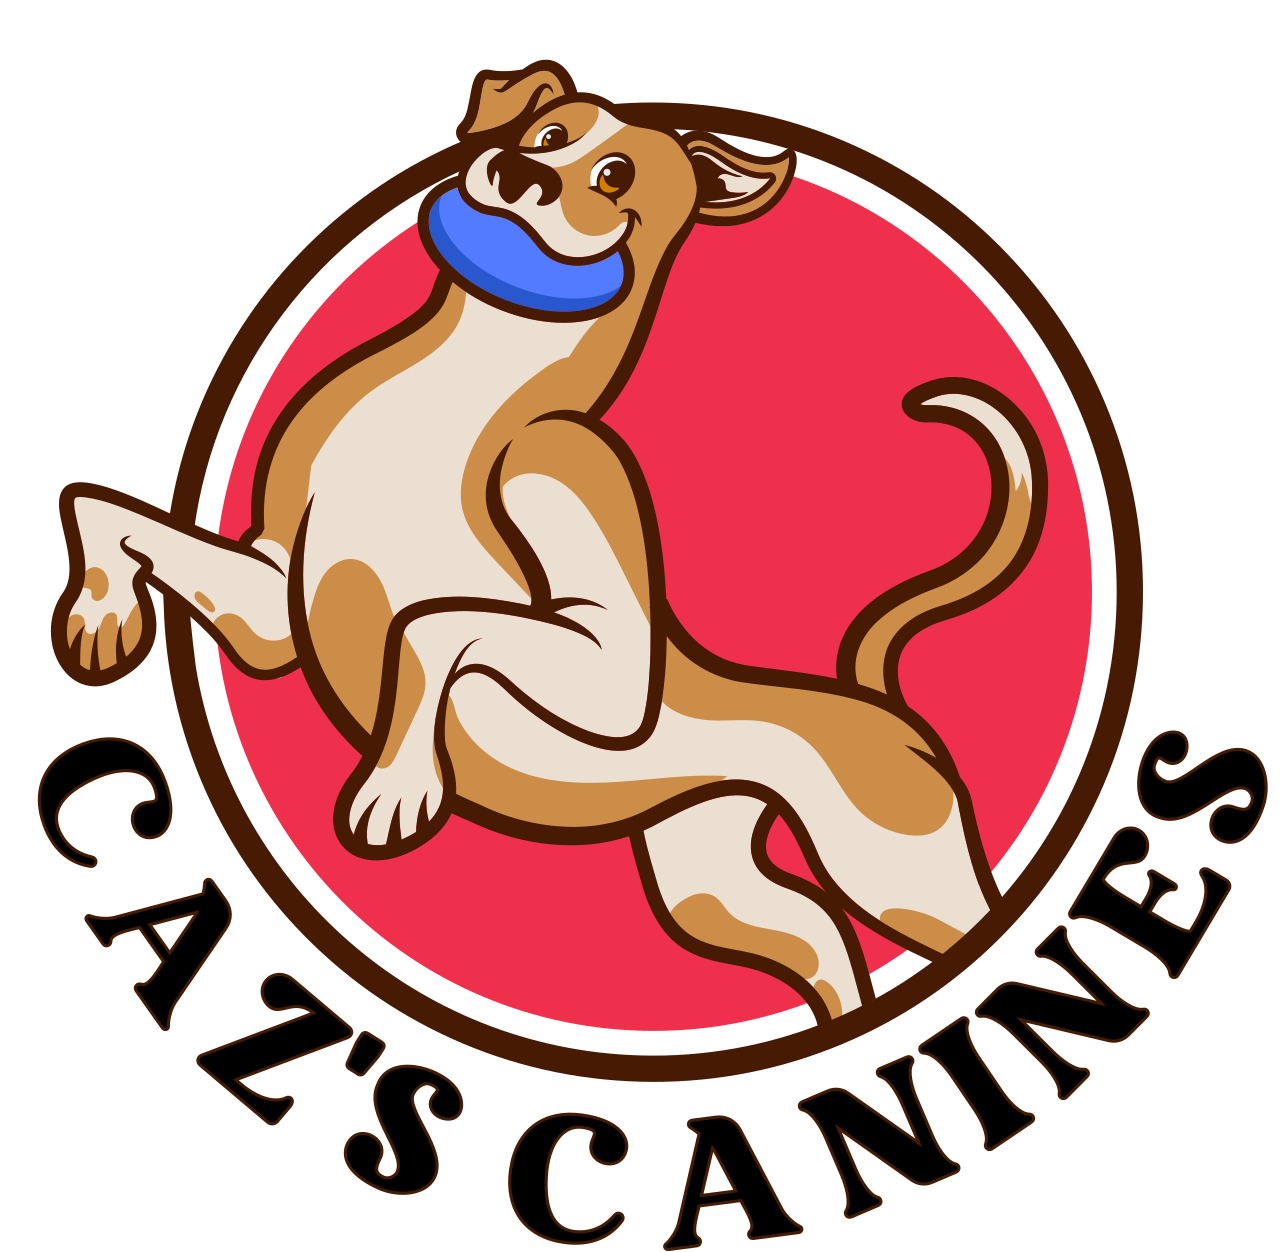 CAZ'S CANINES's logo